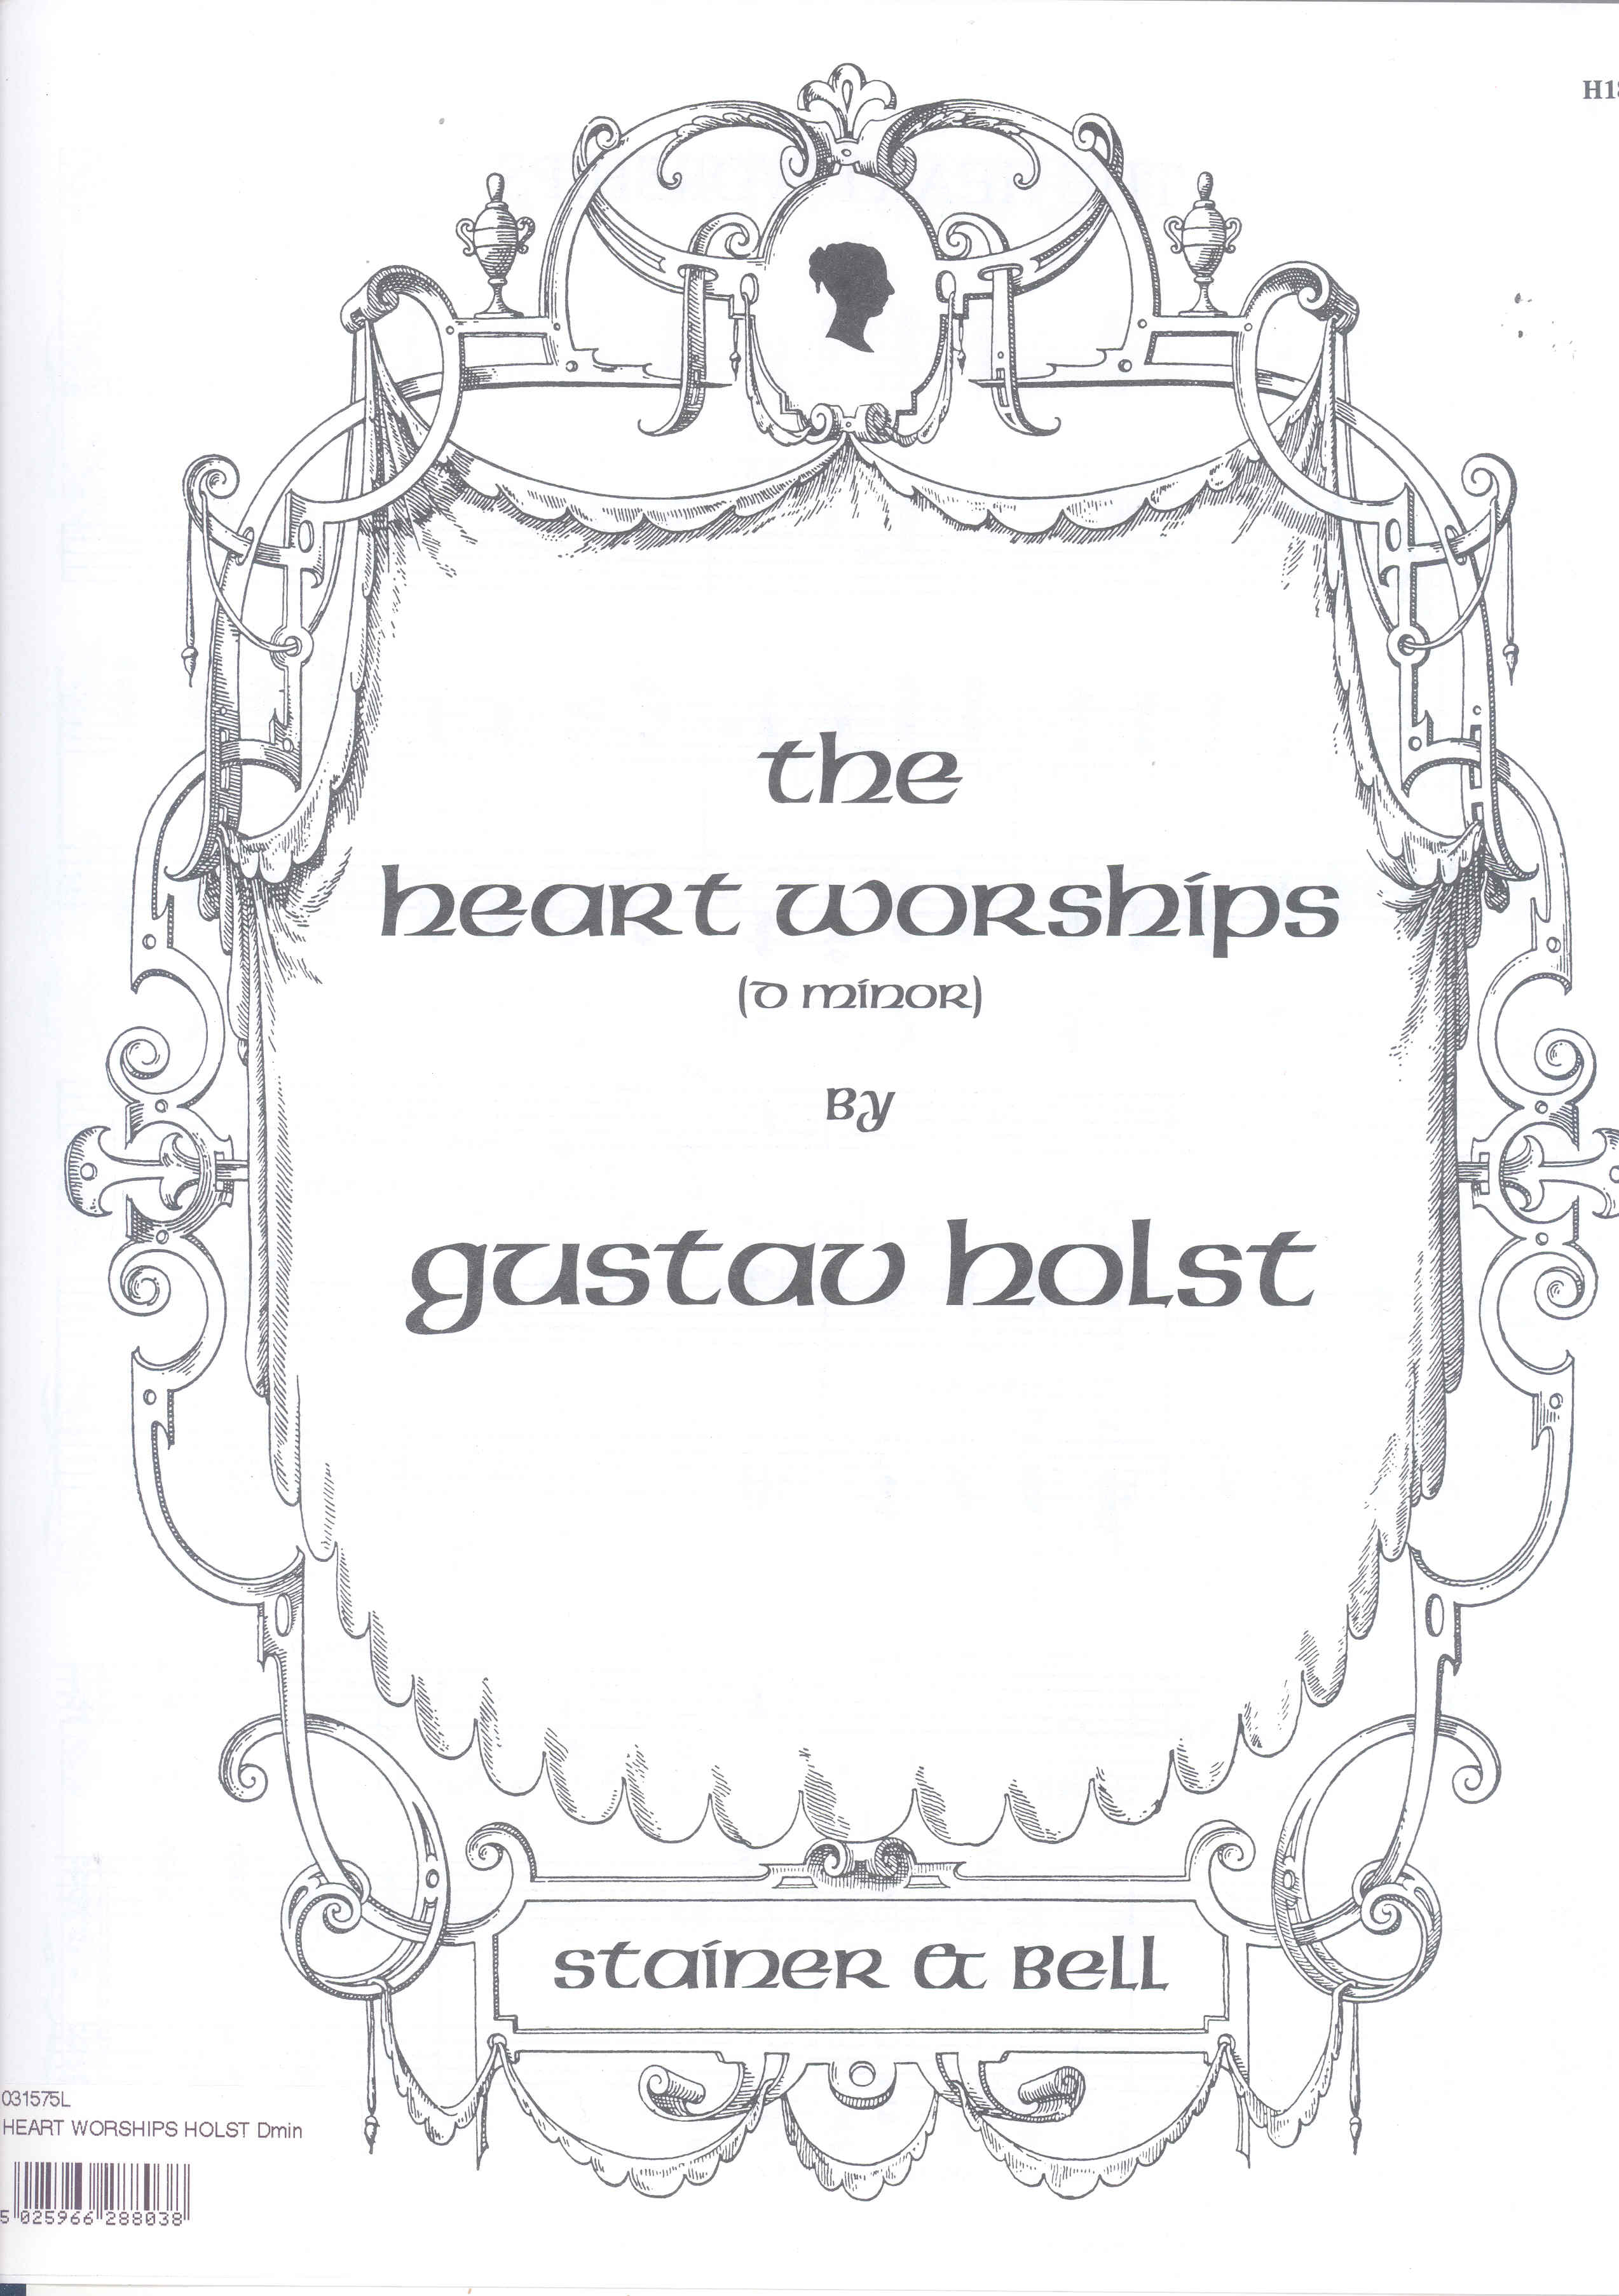 Heart Worships Holst Dmin Sheet Music Songbook